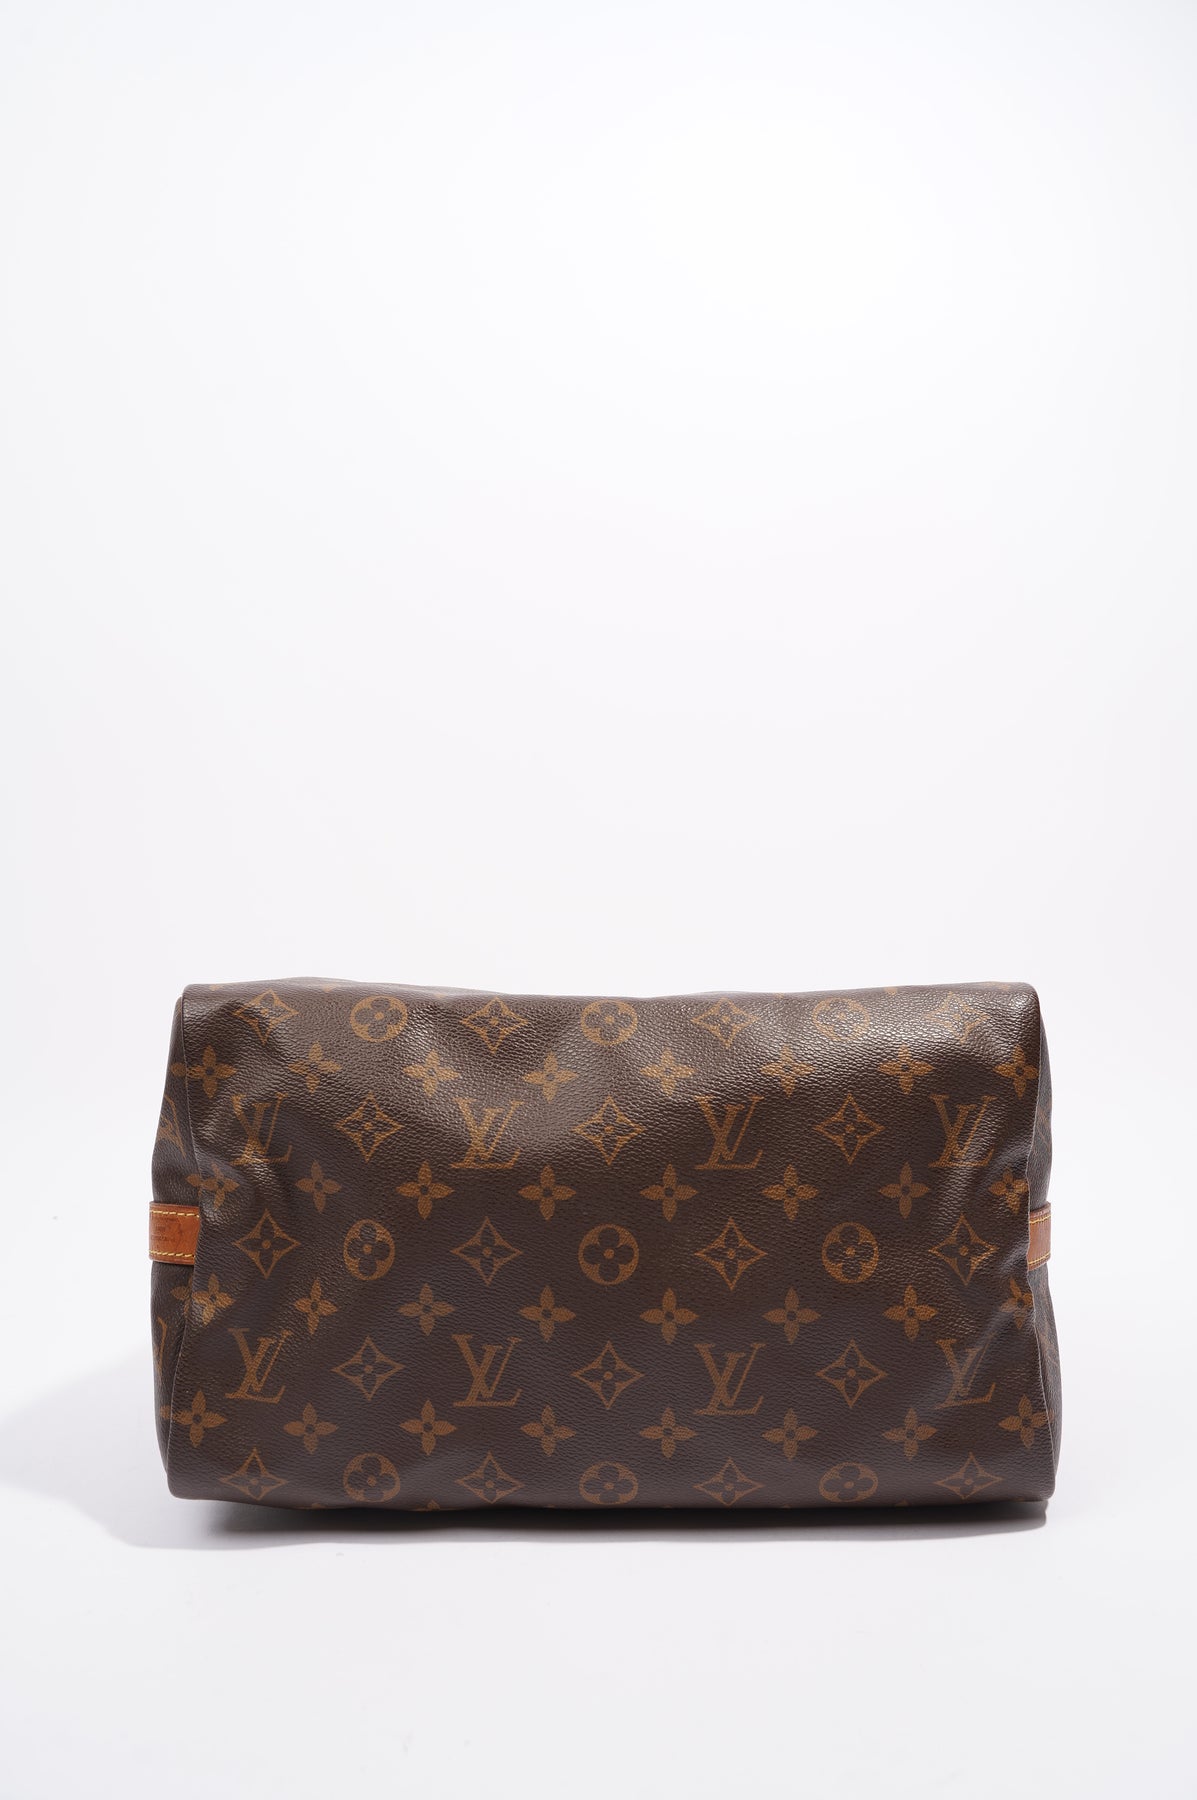 Speedy Bandoulière 20 Monogram Empreinte Leather - Handbags M46517